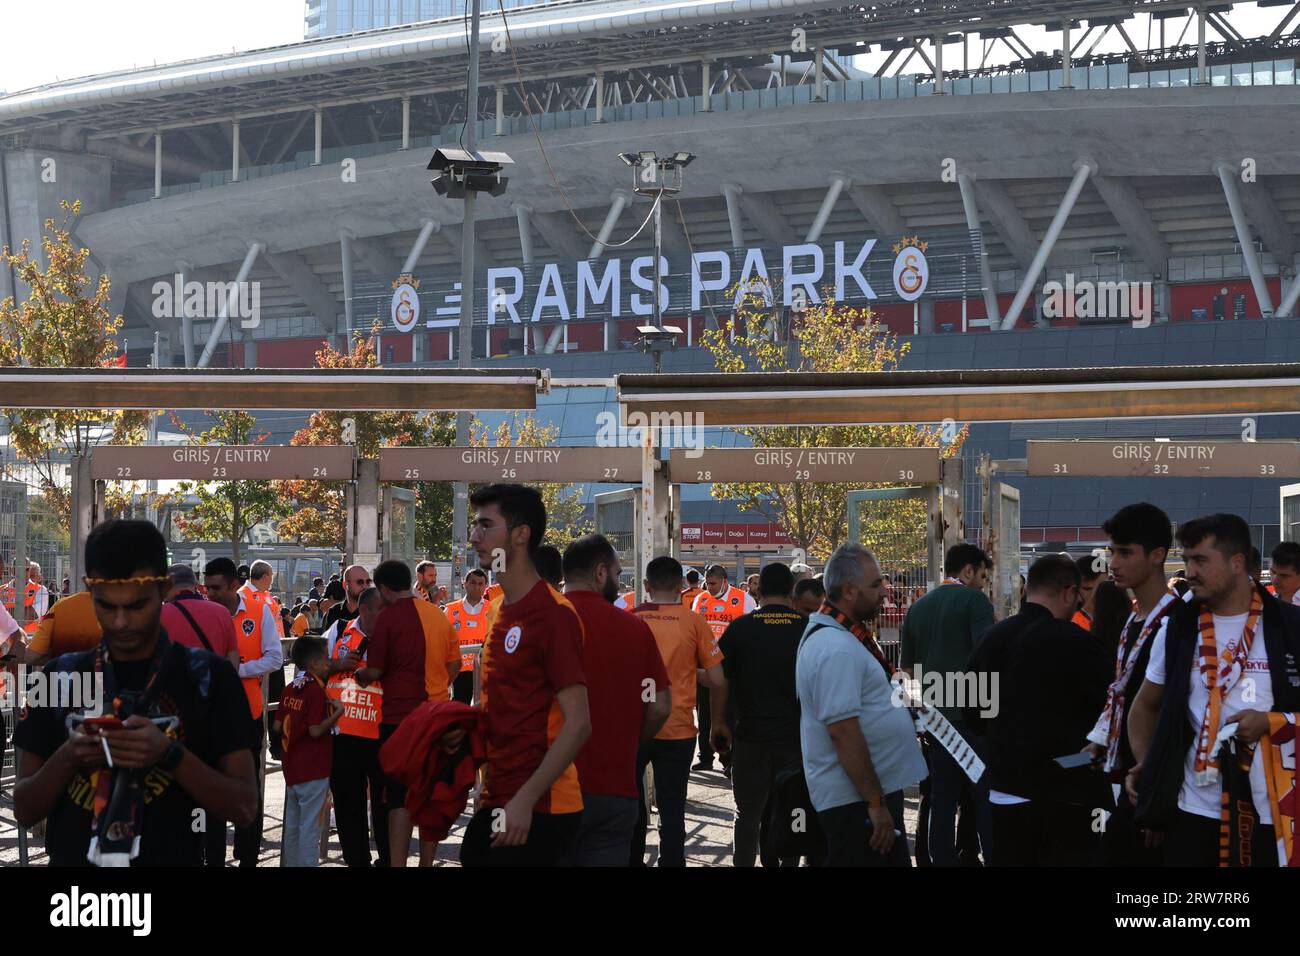 Ali Sami Yen Sports Complex Rams Park football stadium (home of Galatasaray FC) in Istanbul, Turkey Stock Photo